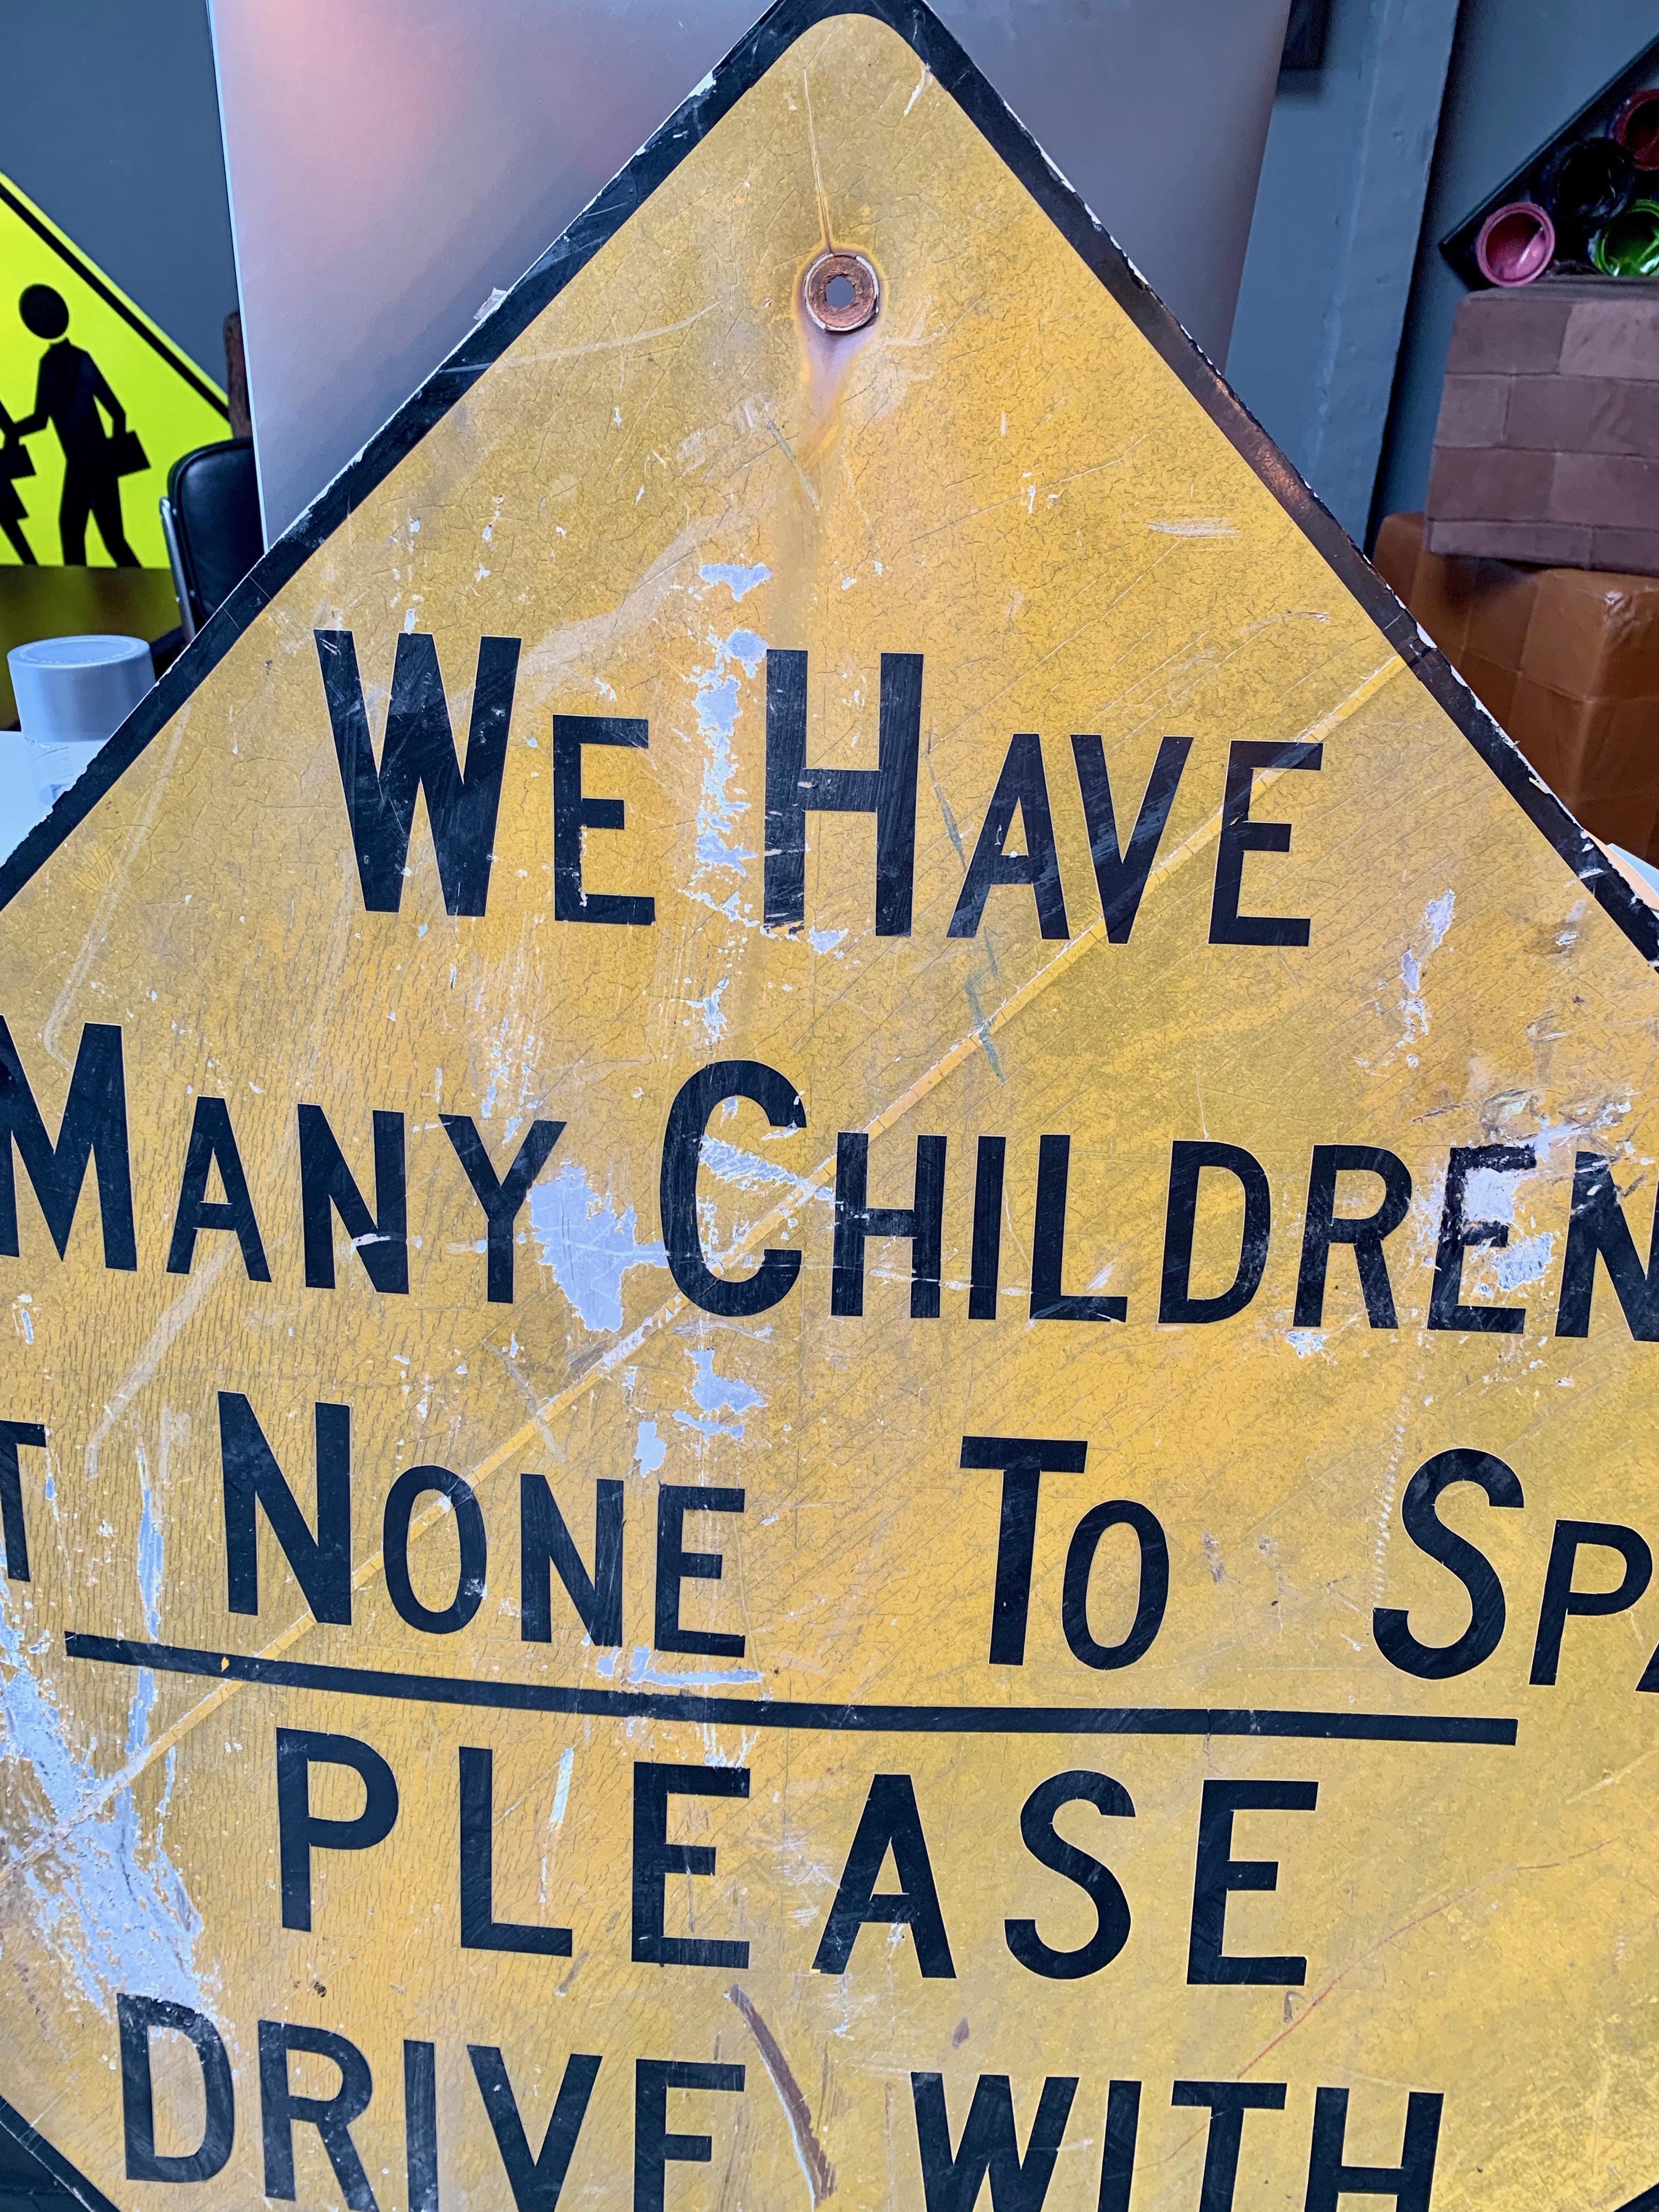 American Massive 'No Children To Spare' Vintage Road Sign